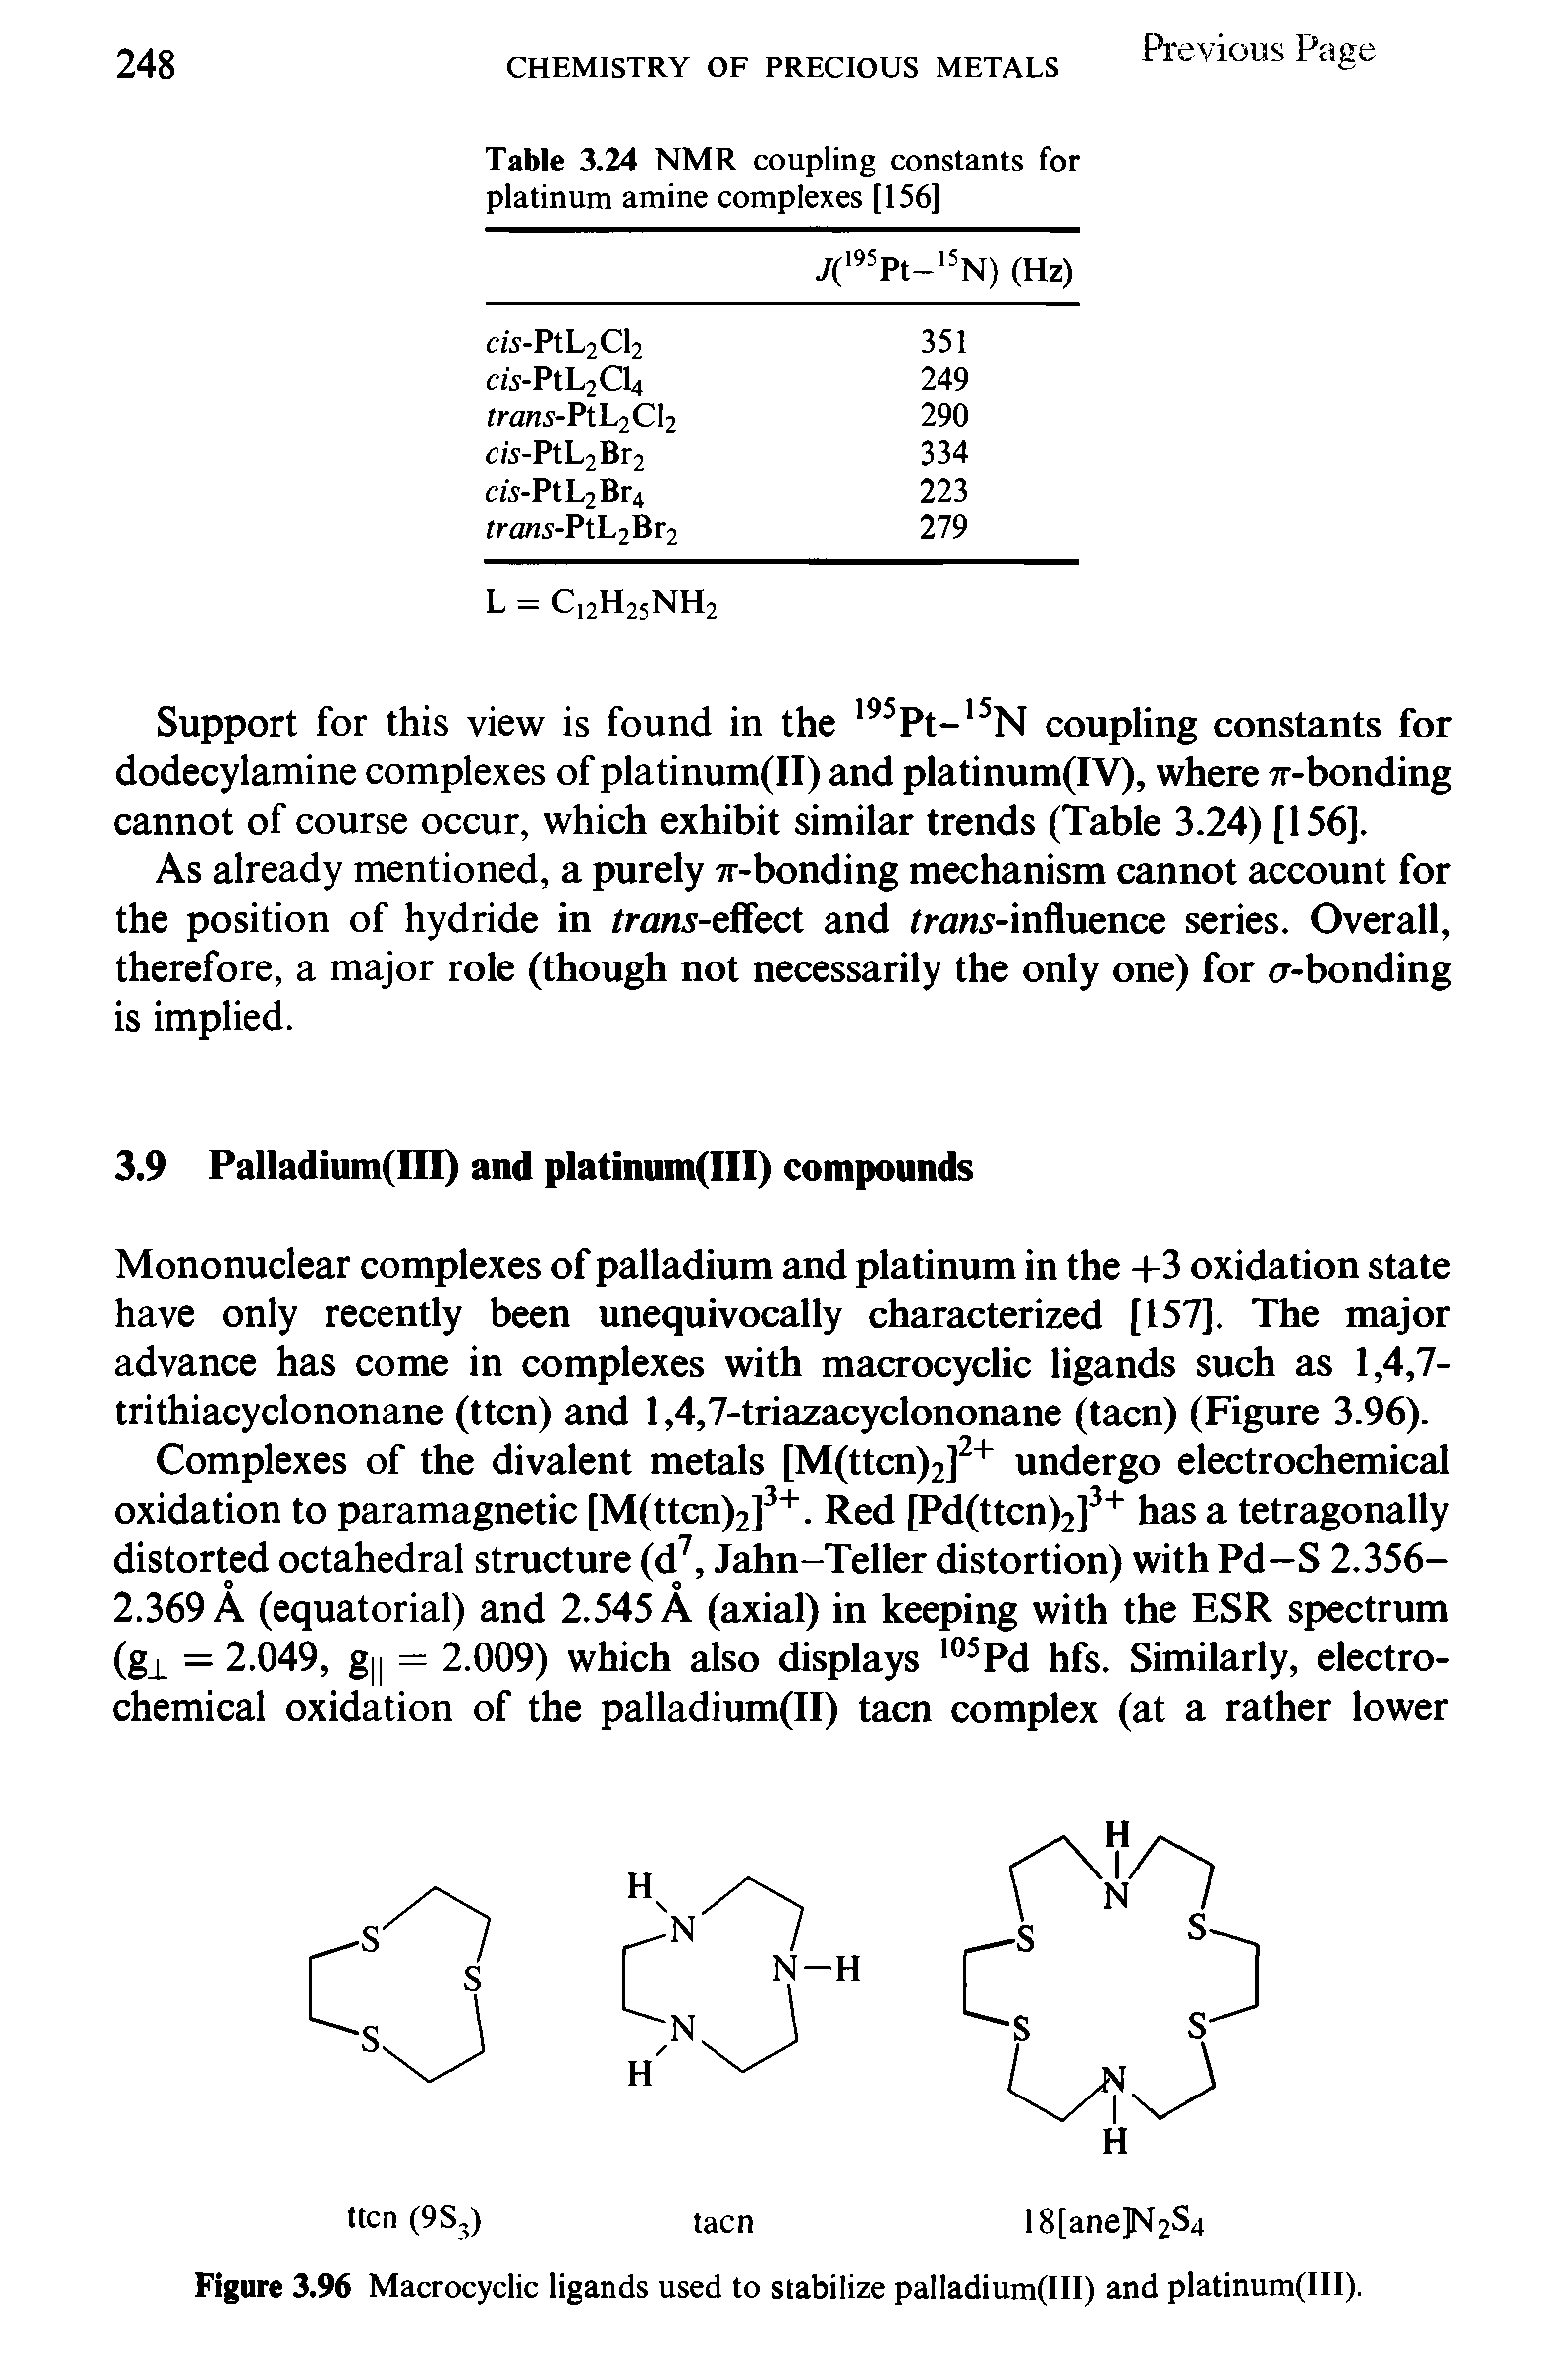 Figure 3.96 Macrocyclic ligands used to stabilize palladium(III) and platinum(III).